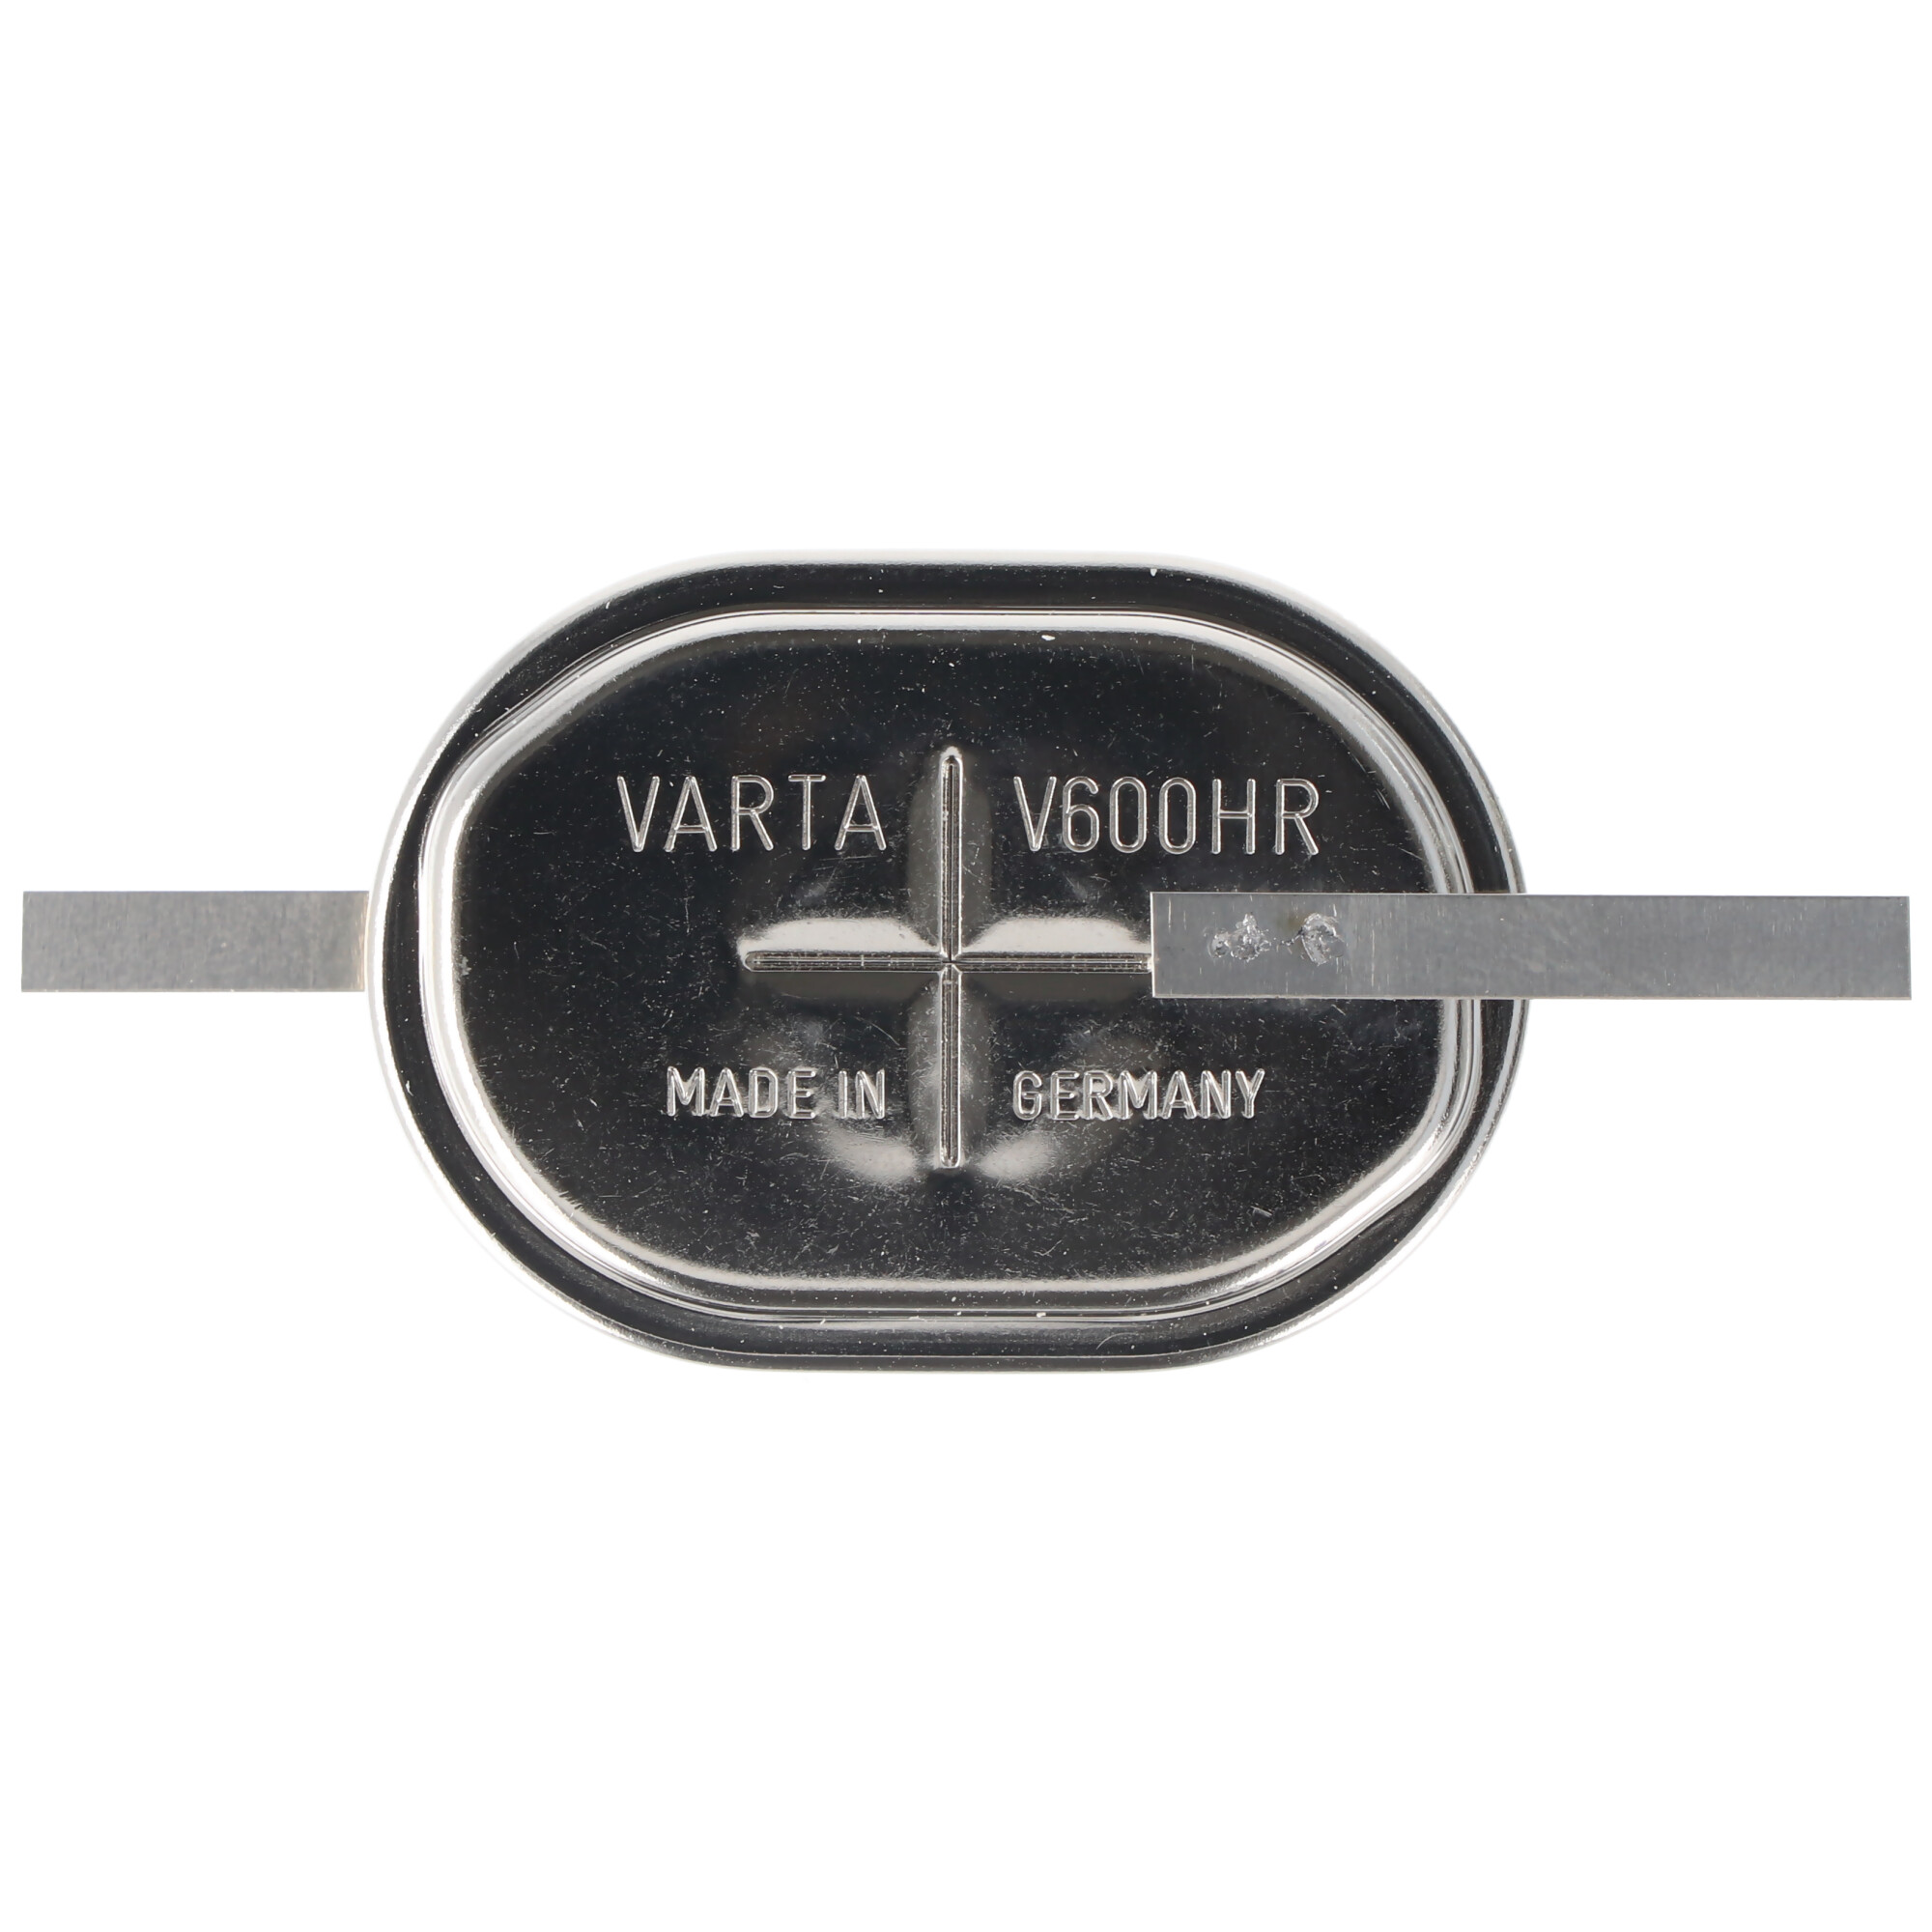 Varta V600HR NiMH Akku aufladbare NiMH Knopfzelle mit Lötfahne Z